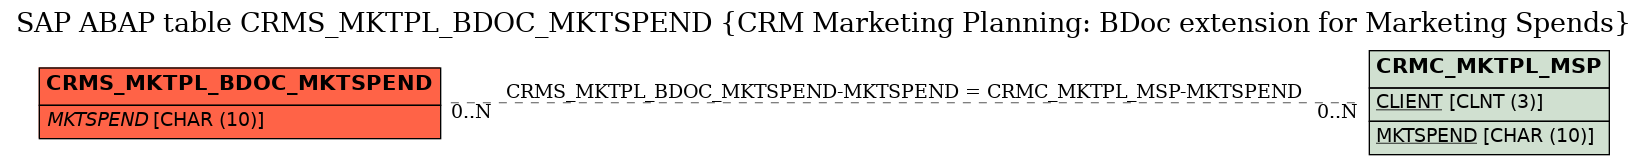 E-R Diagram for table CRMS_MKTPL_BDOC_MKTSPEND (CRM Marketing Planning: BDoc extension for Marketing Spends)